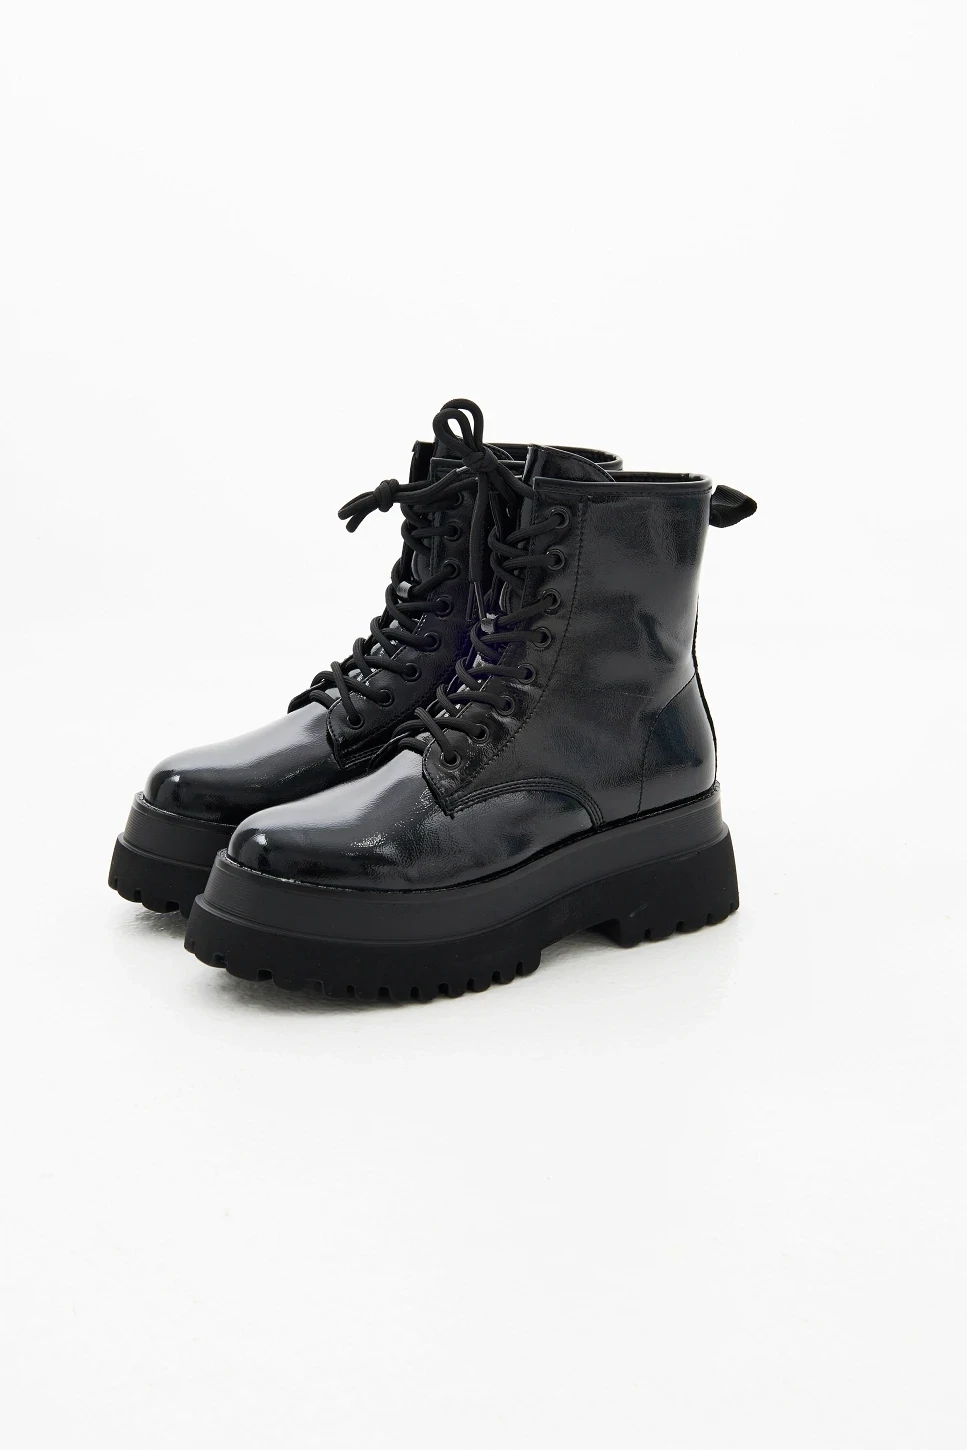 BSB Lak Boots Black